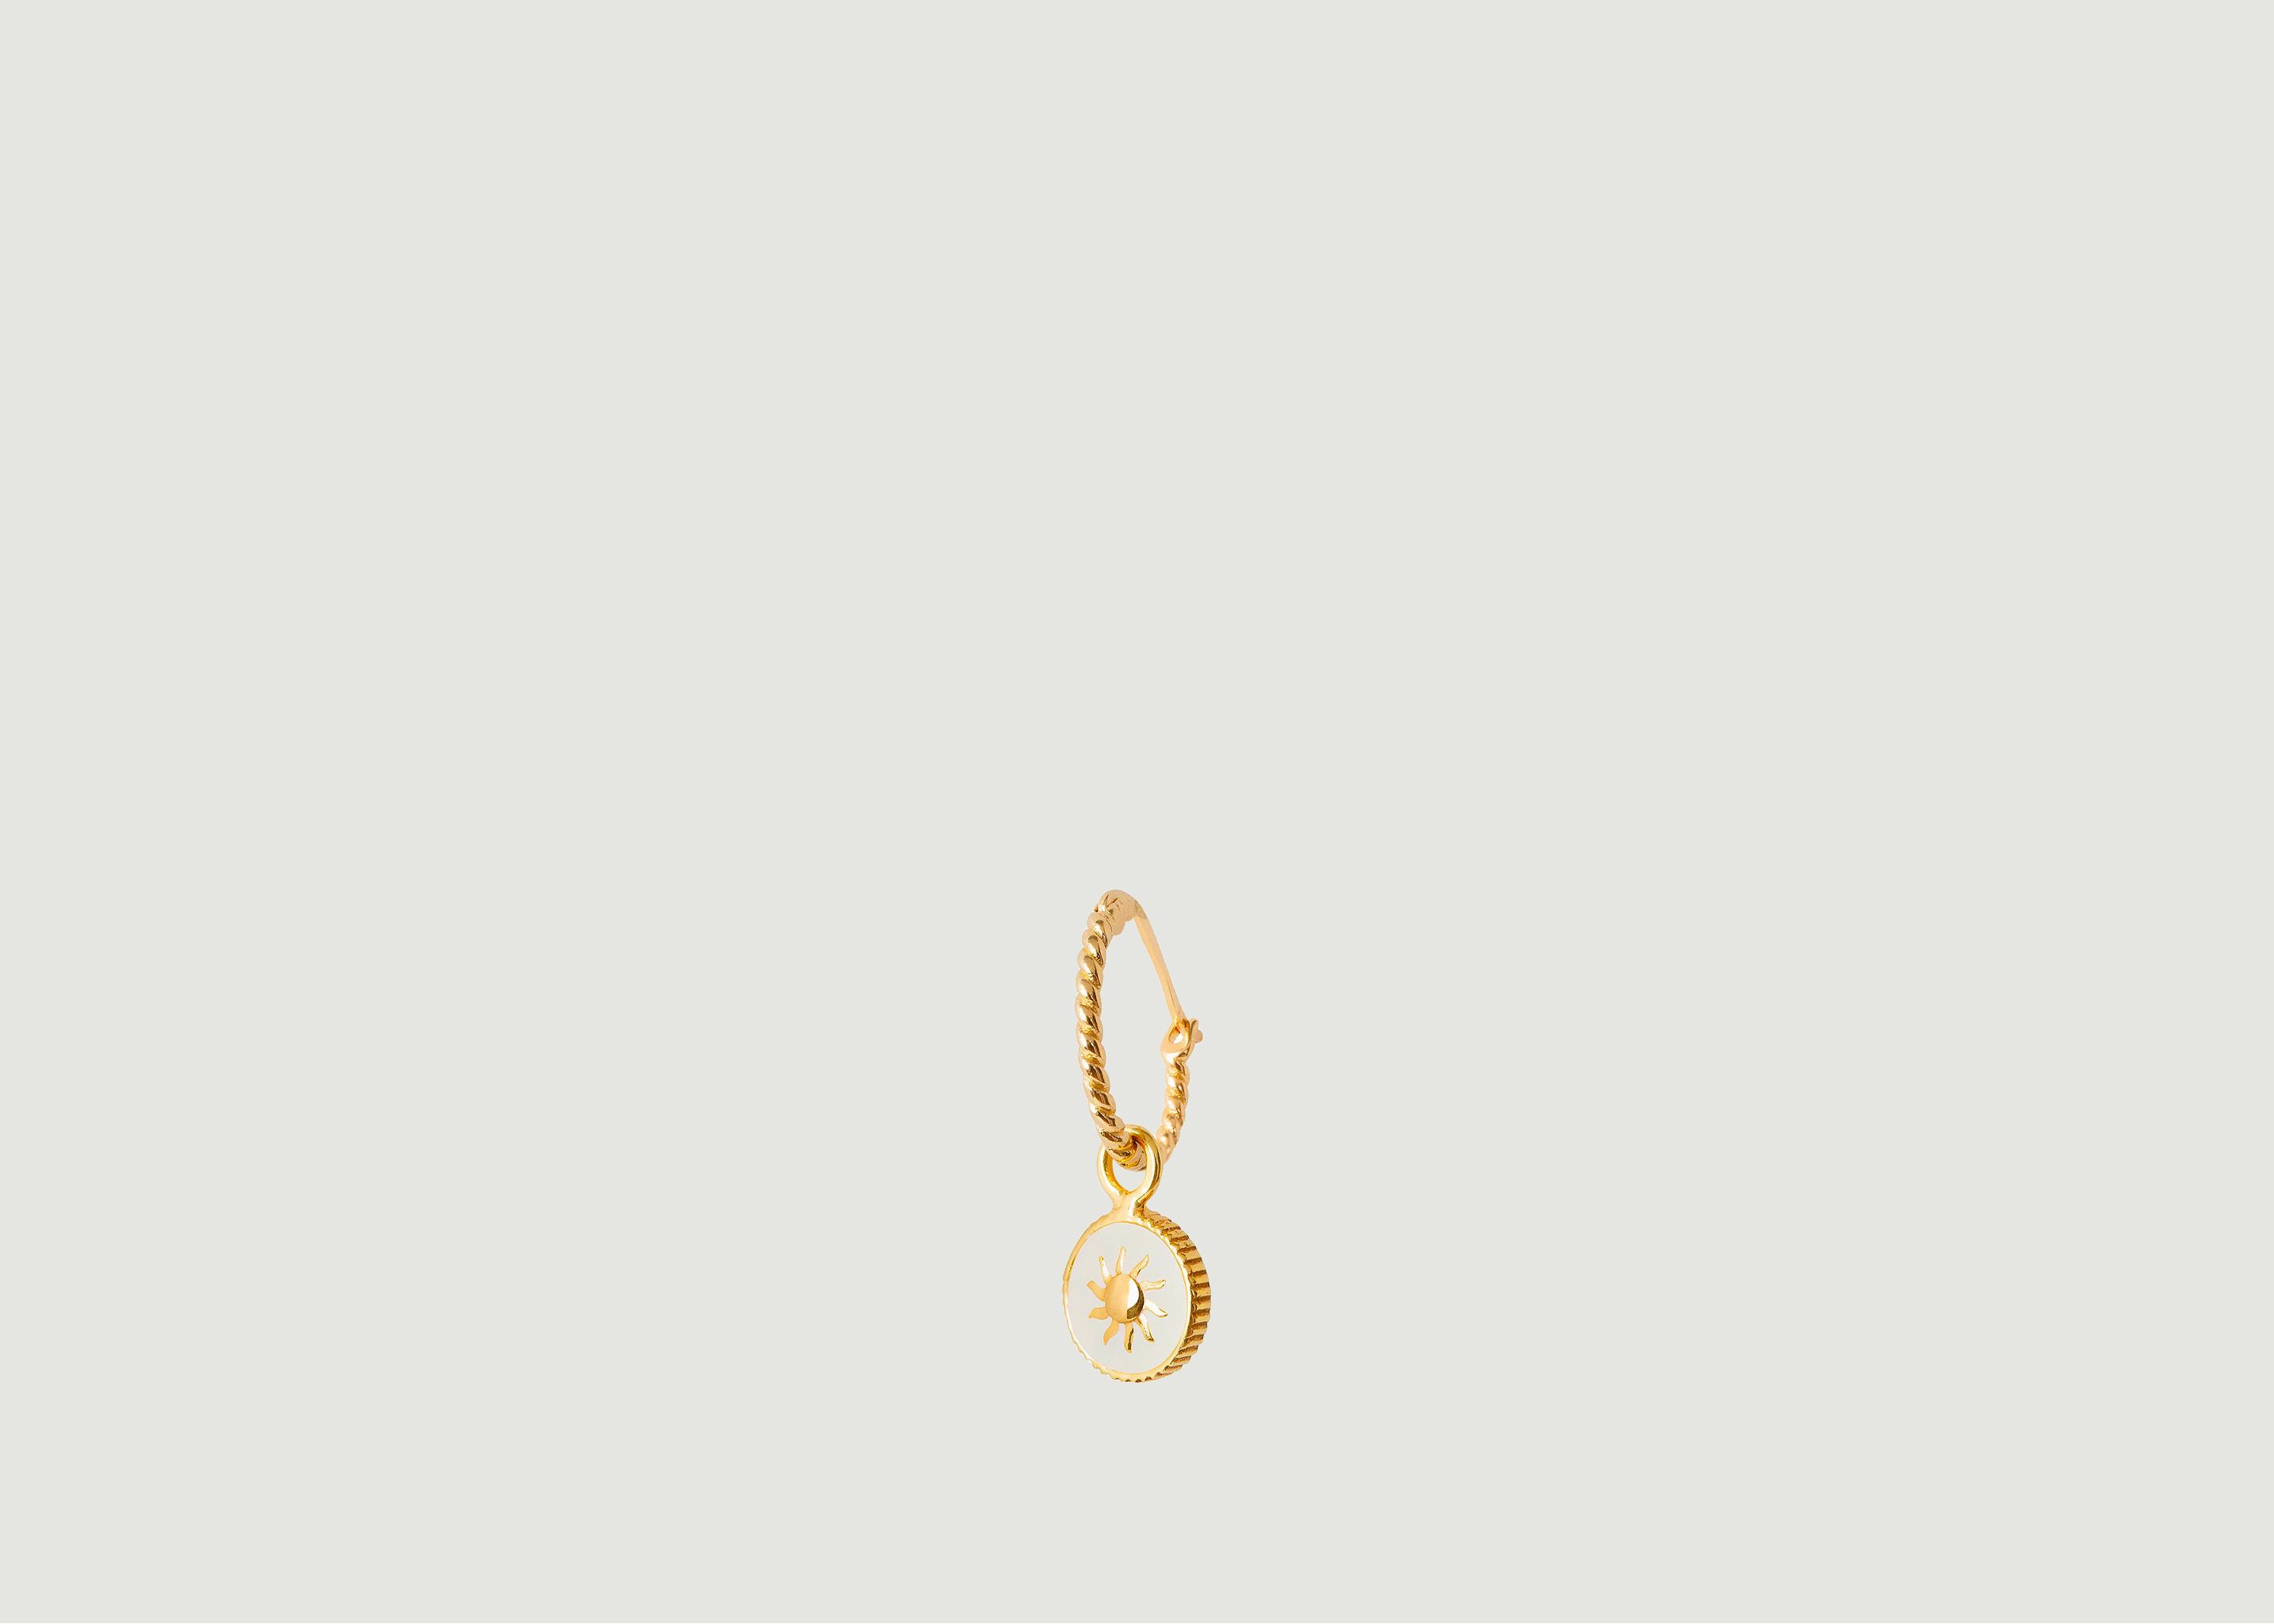 Gold White Dust Cosmic Rope Earring - Wilhelmina Garcia